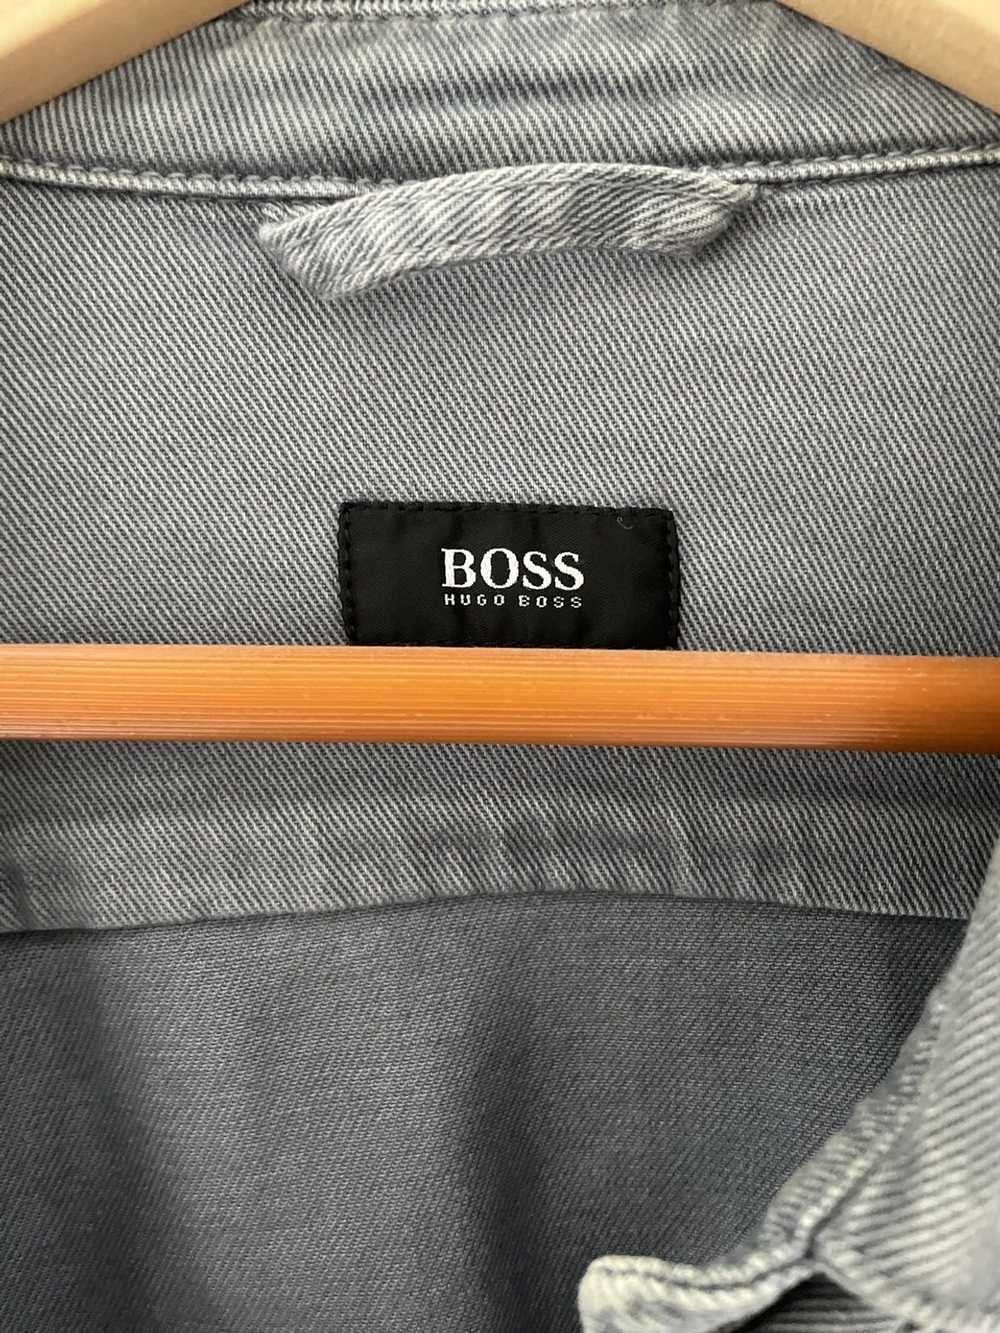 Hugo Boss Hugo Boss Jean Jacket - image 2